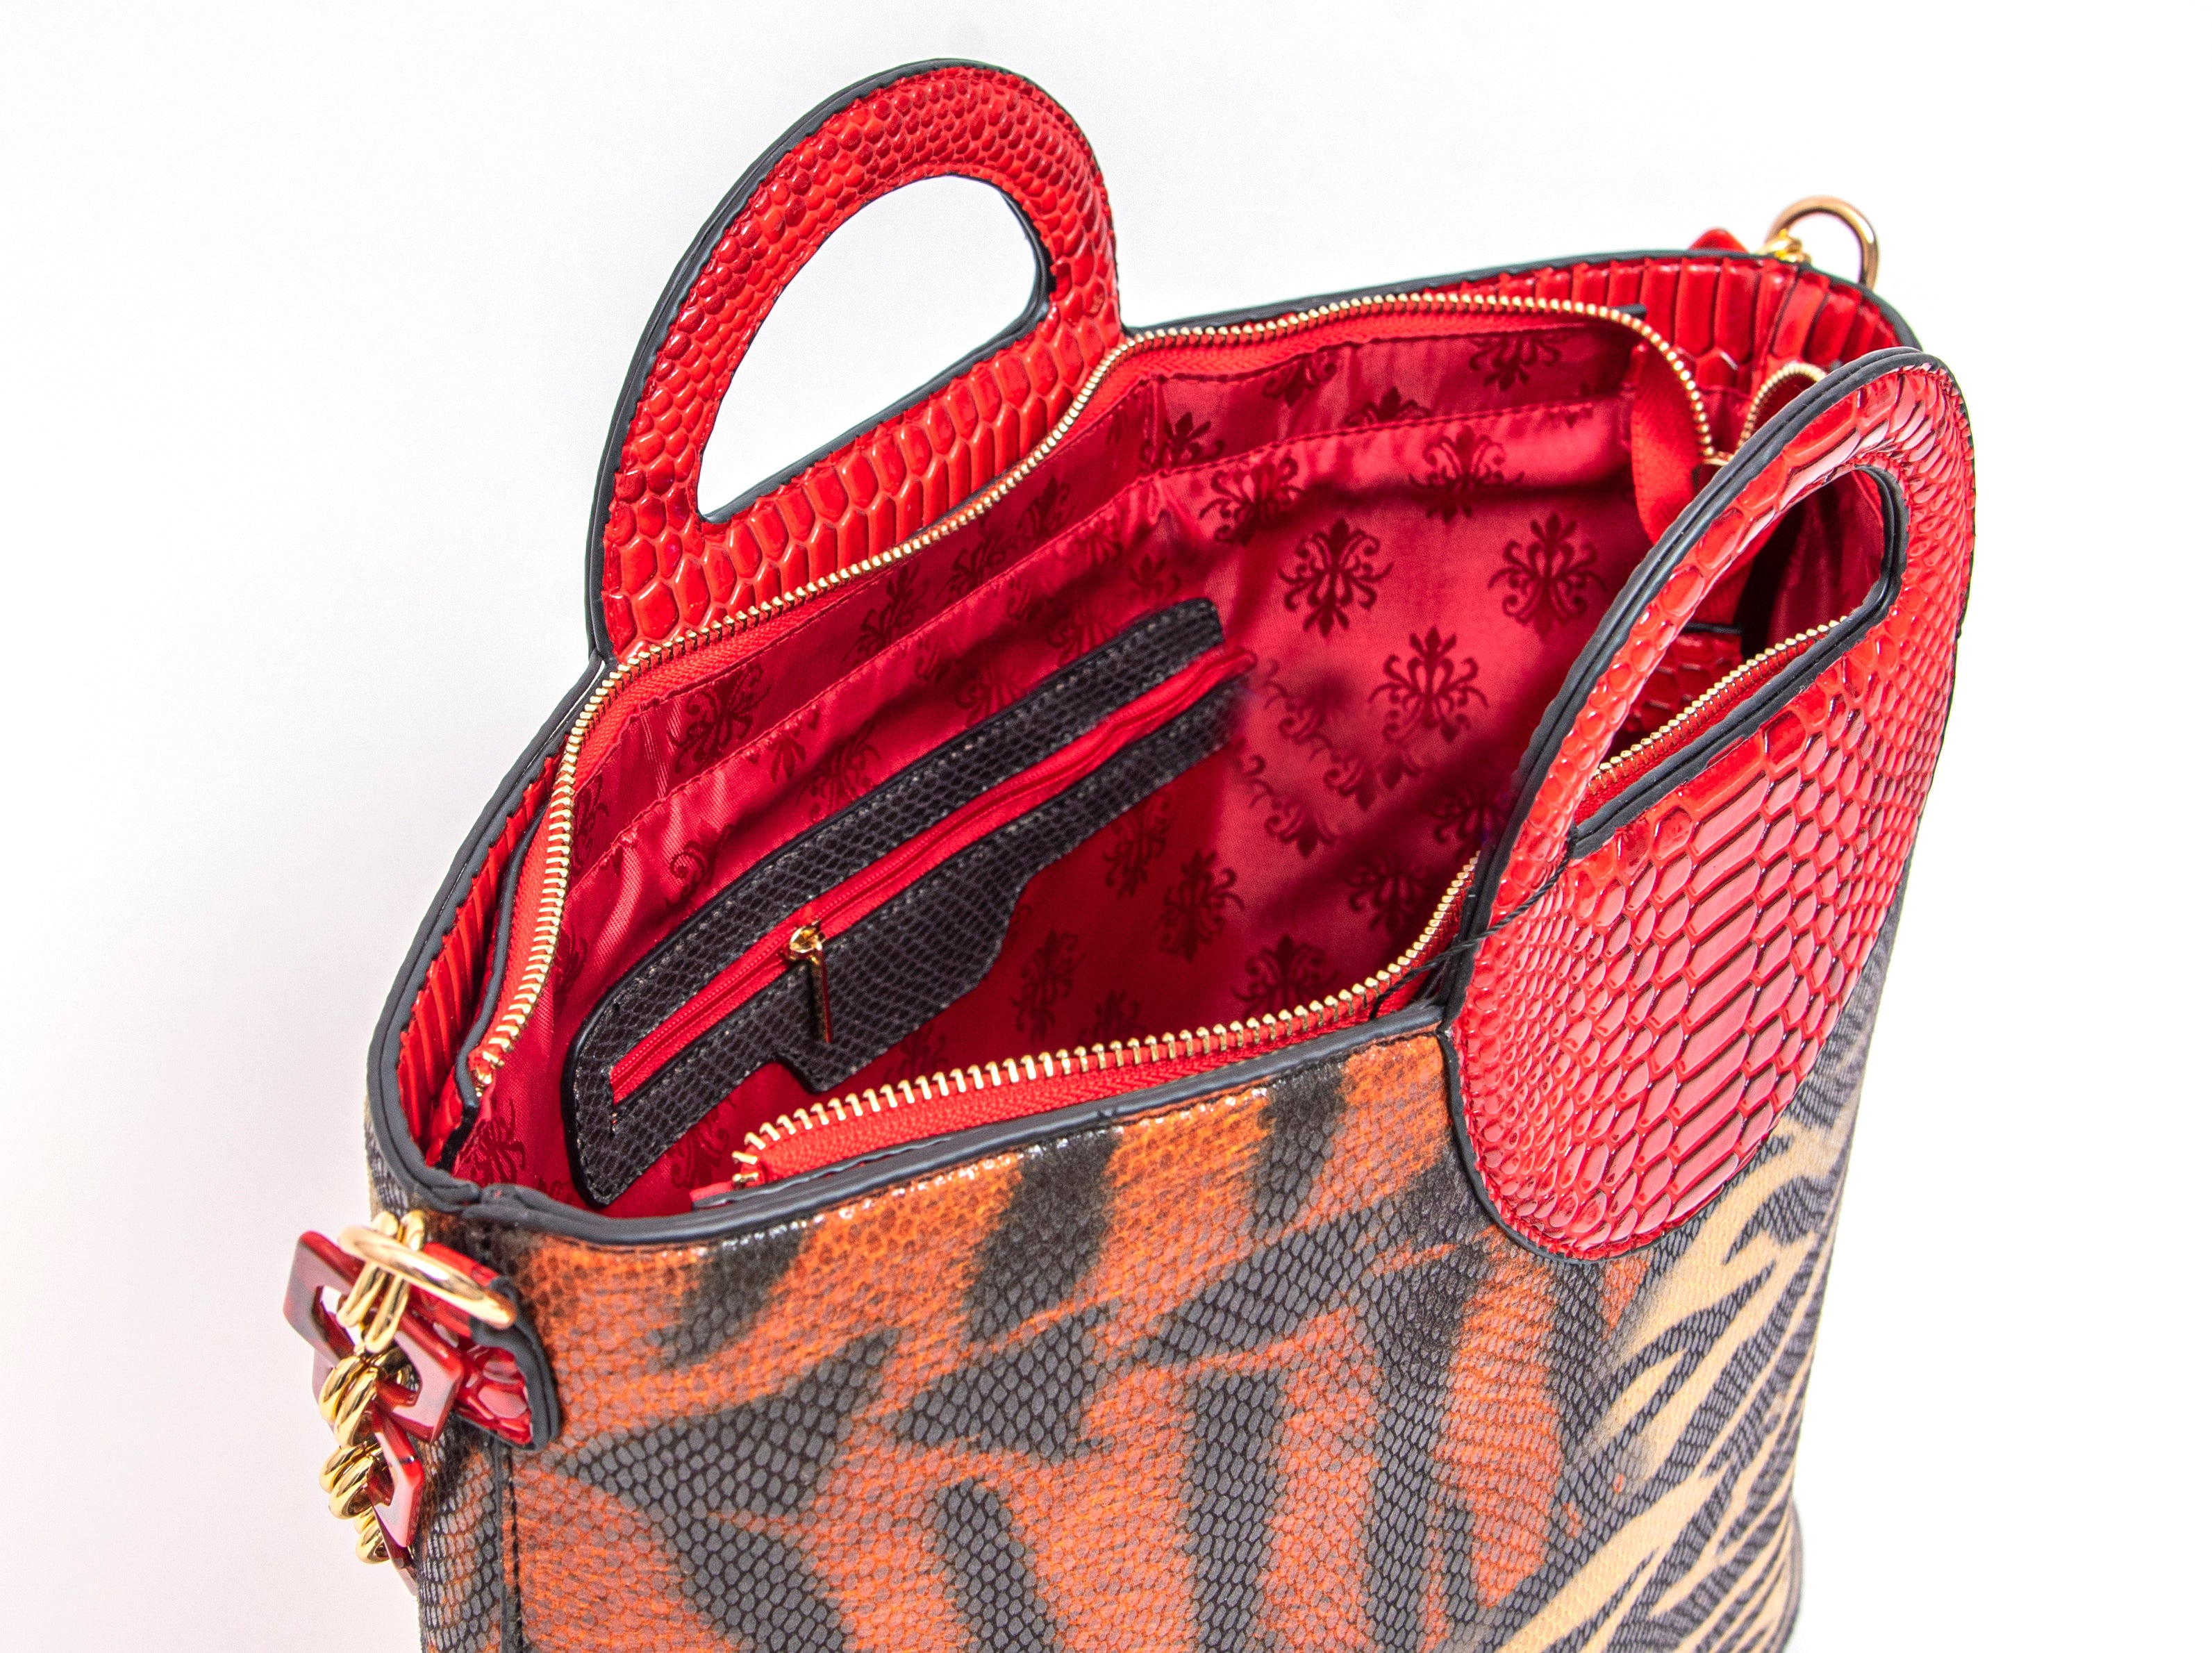 Okella's "Hybrid" Handbag